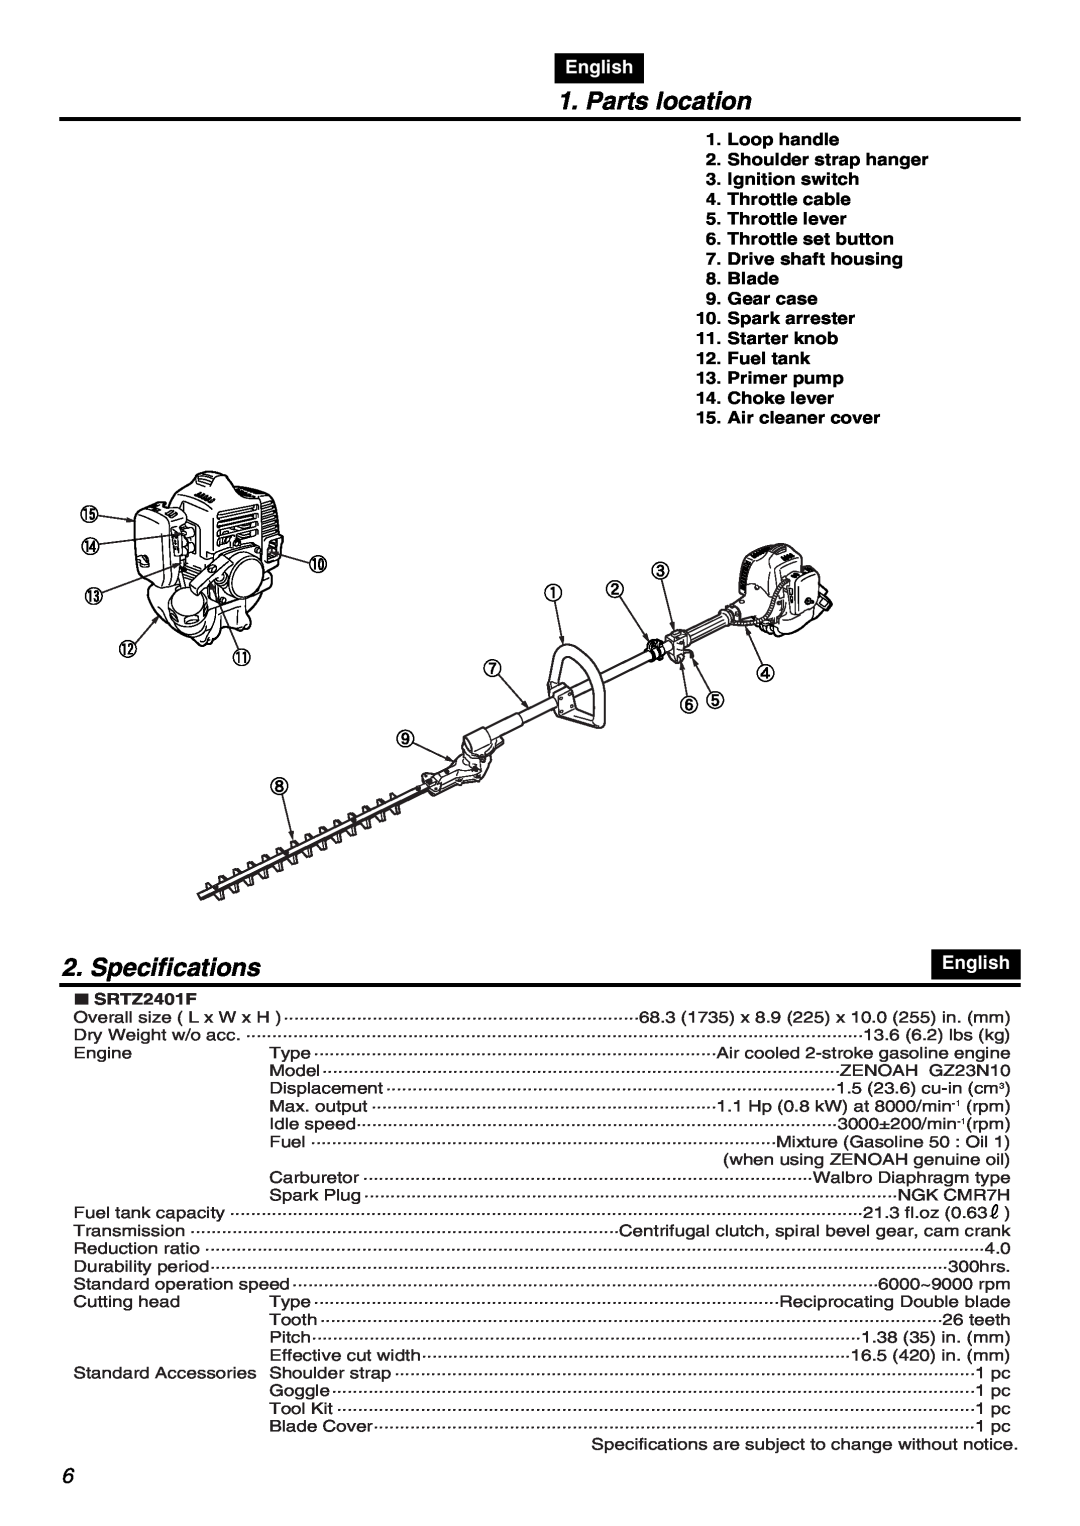 RedMax SRTZ2401F manual Parts location, Specifications, English, Loop handle 2. Shoulder strap hanger 3. Ignition switch 